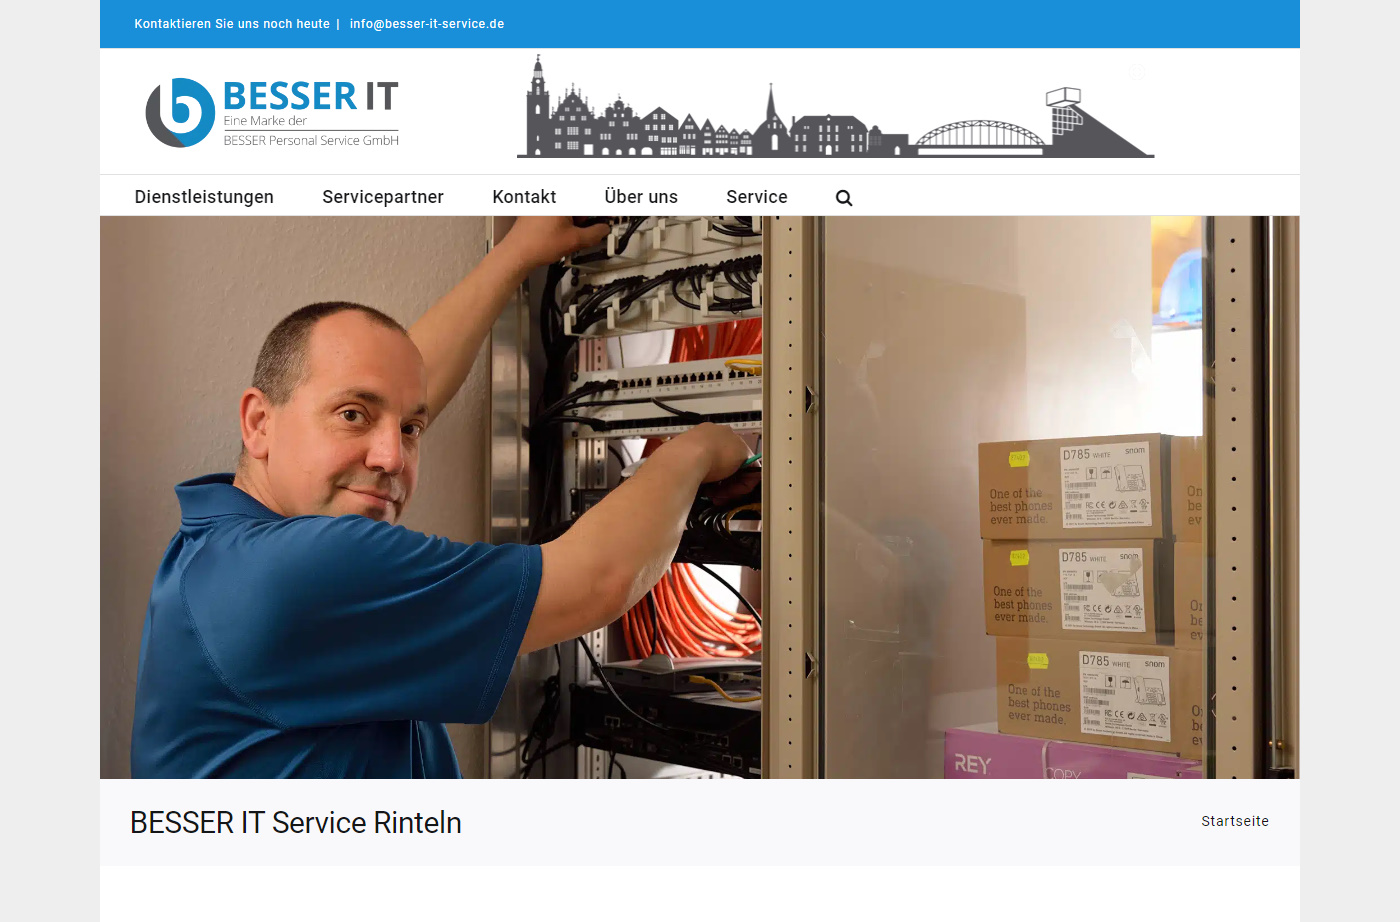 BESSER IT Service Rinteln 18